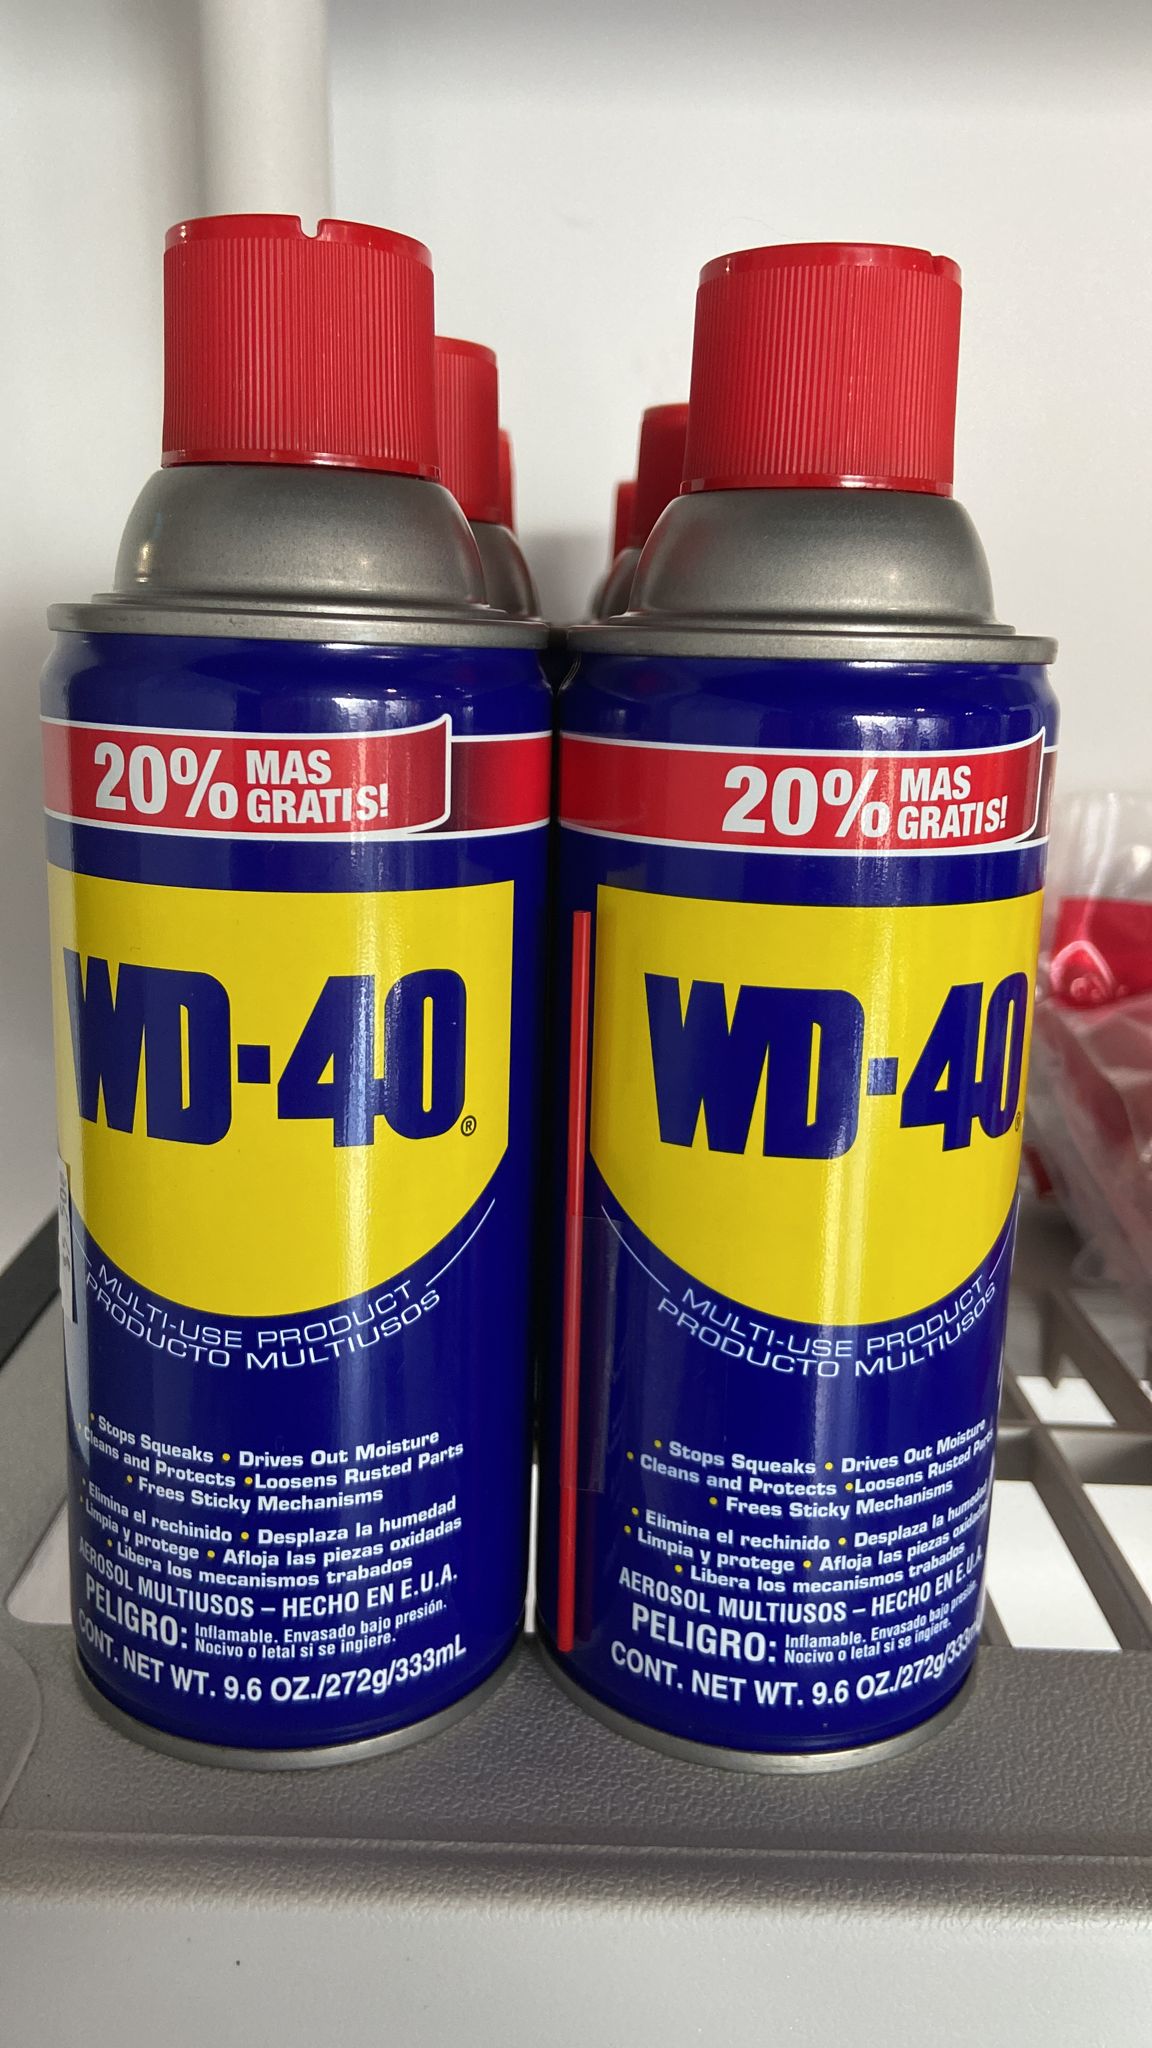 WD-40 lubricante